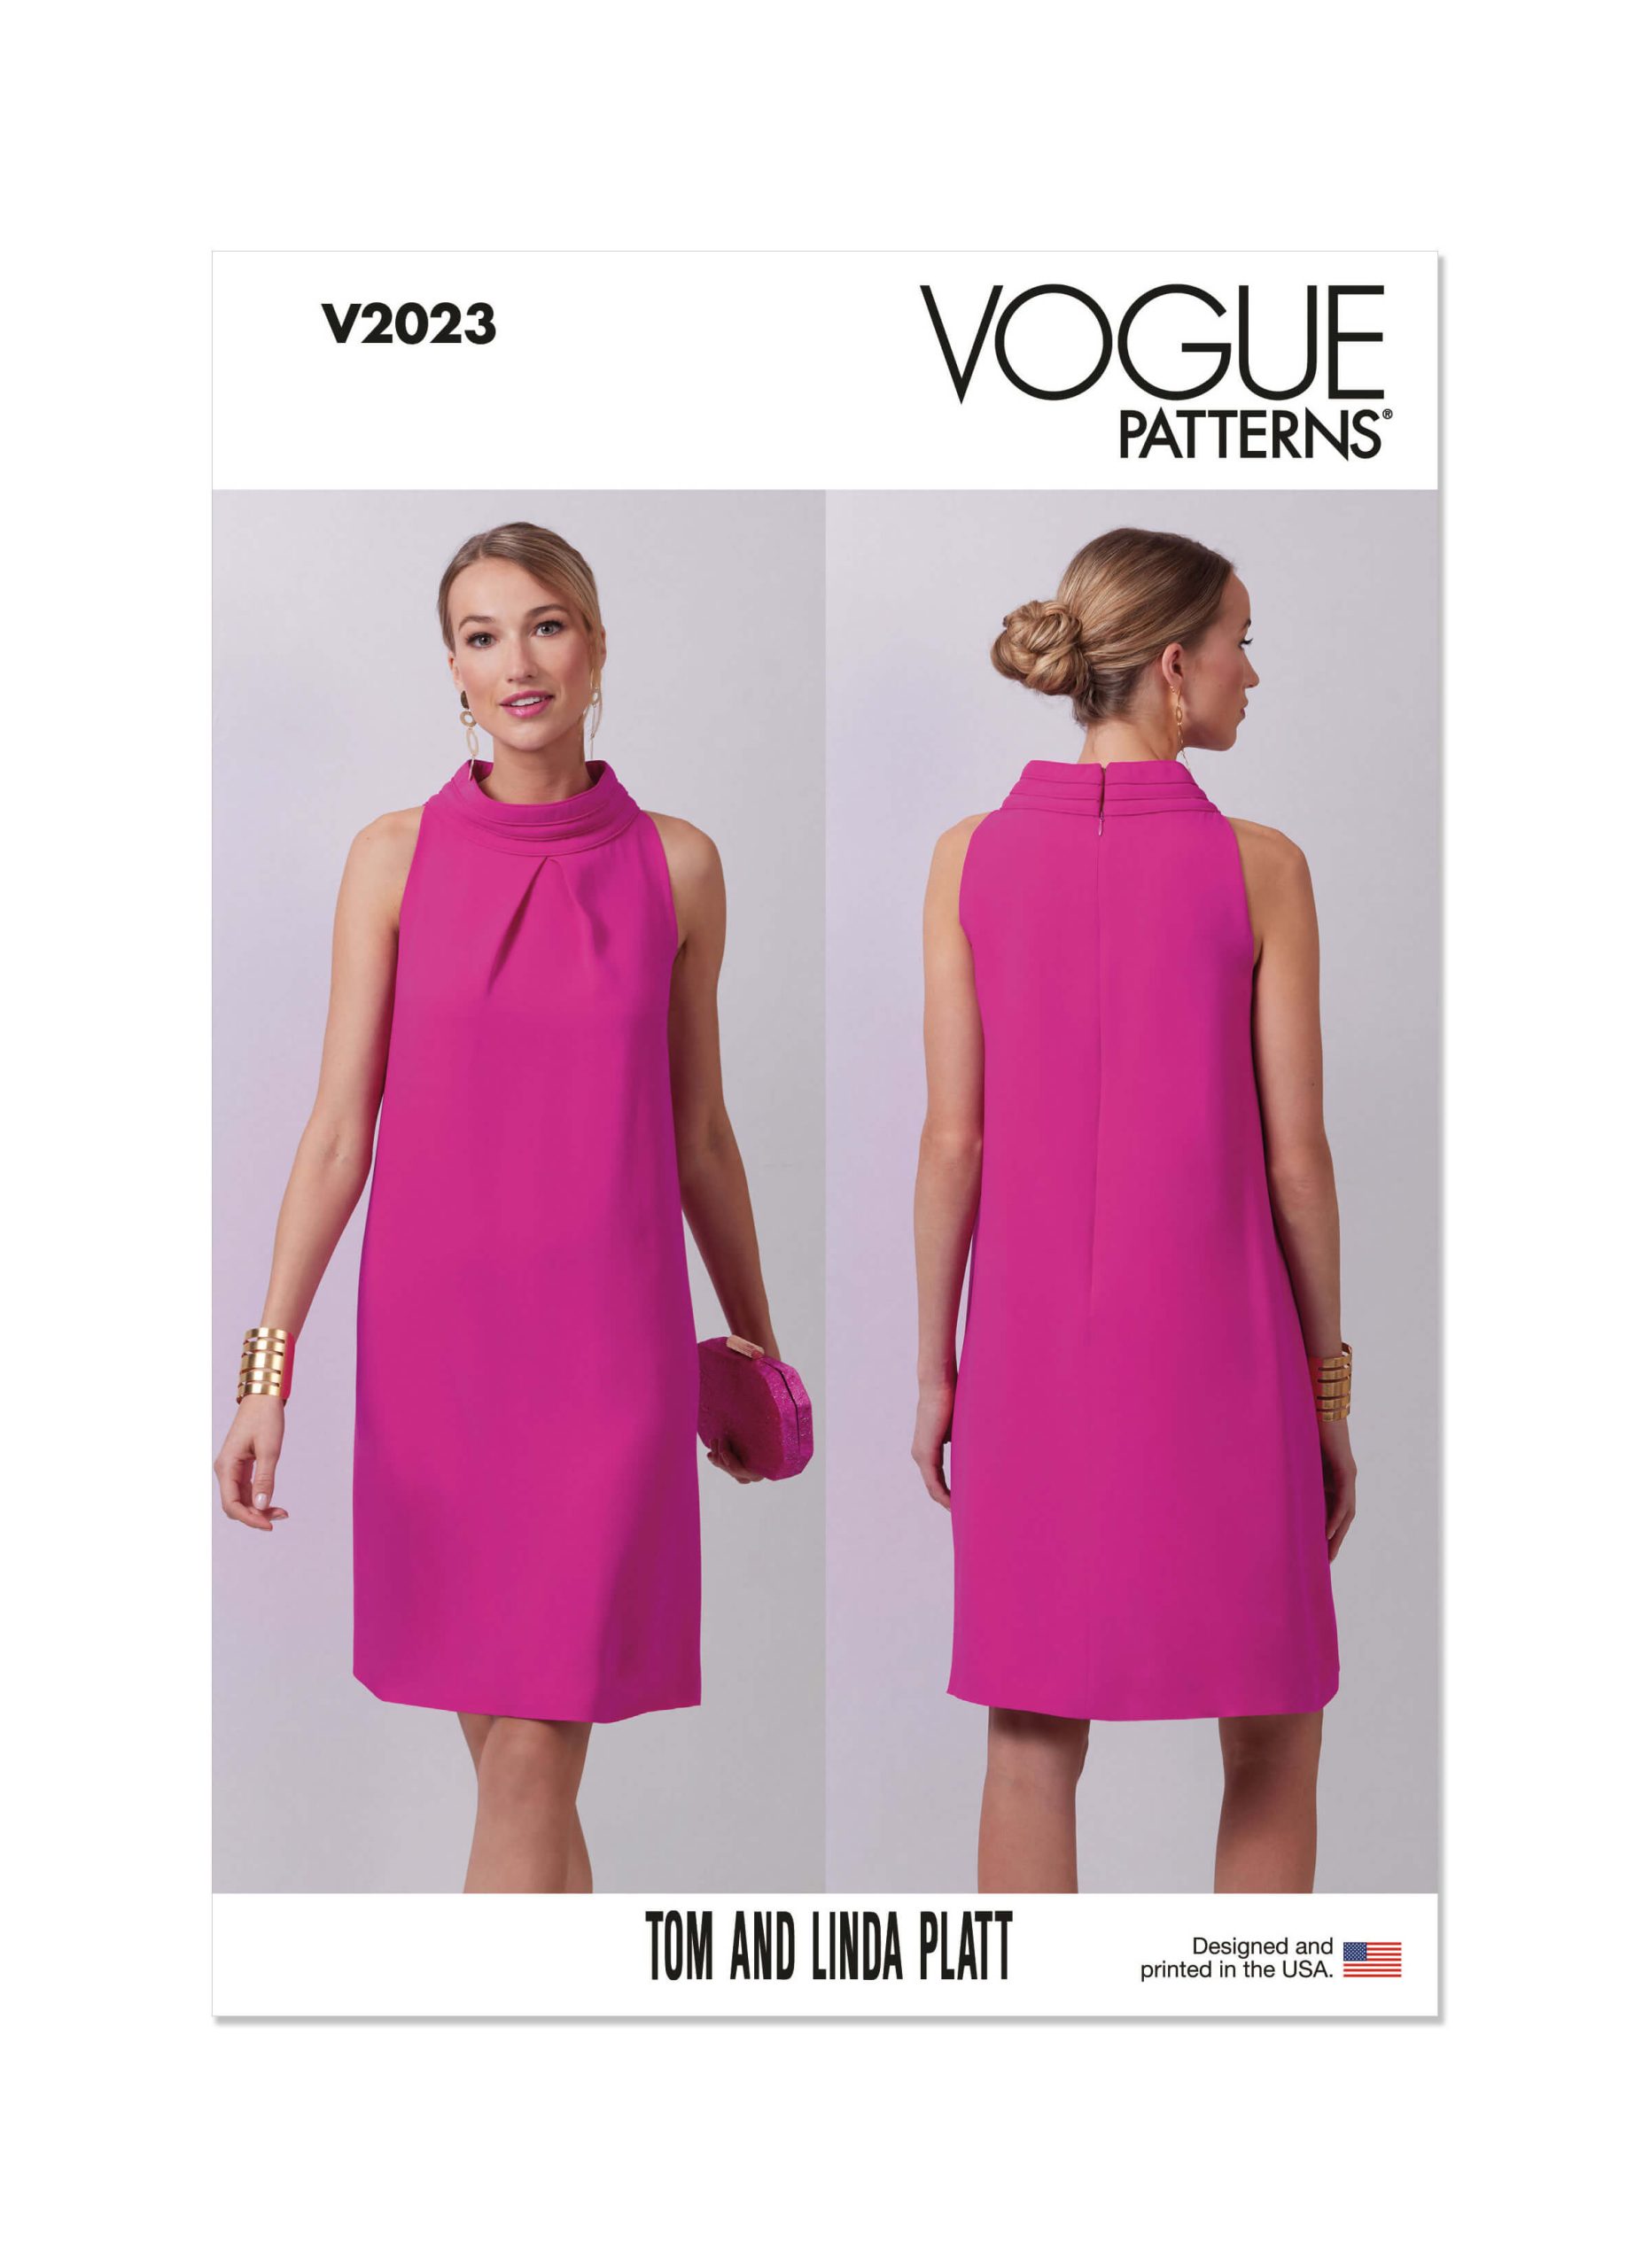 Vogue Patterns V2023 Misses' Dress by Tom and Linda Platt